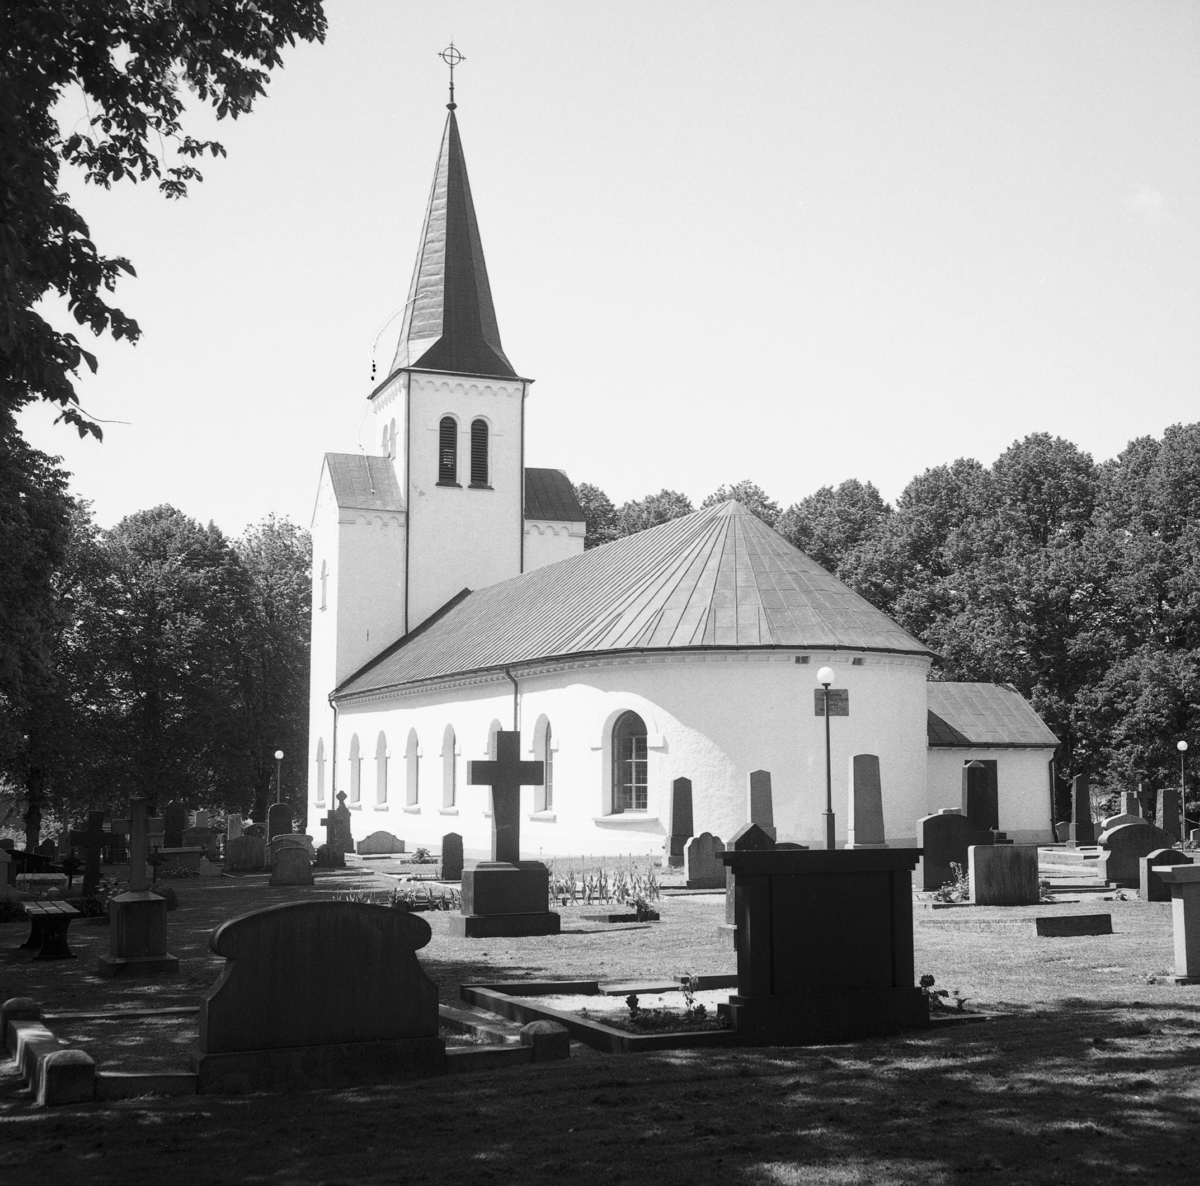 Getinge kyrka